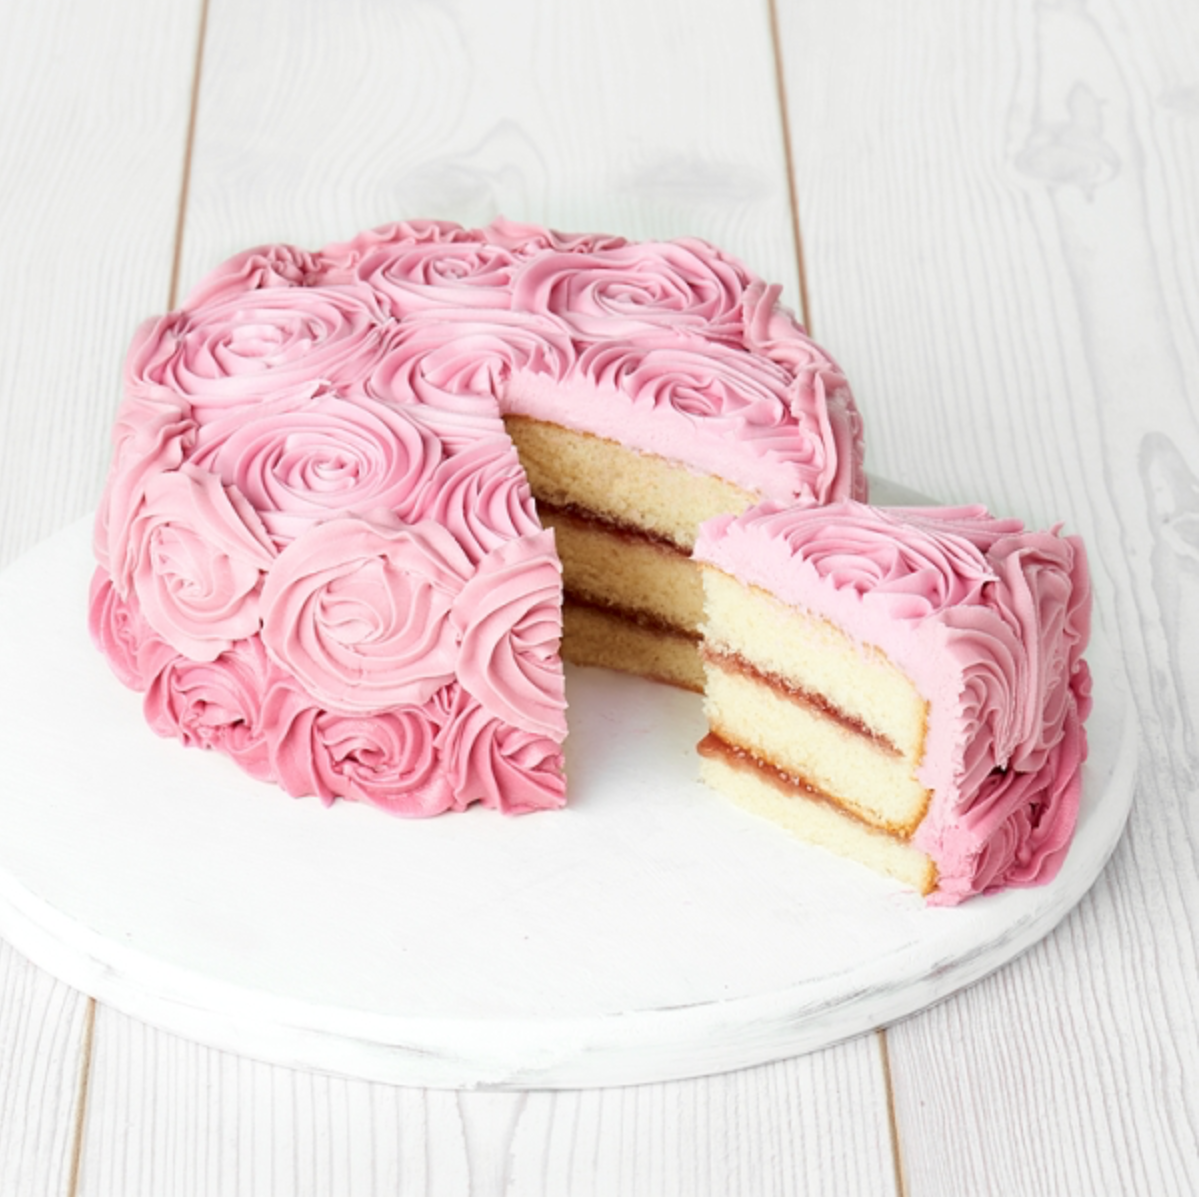 Sainsbury's rose cake